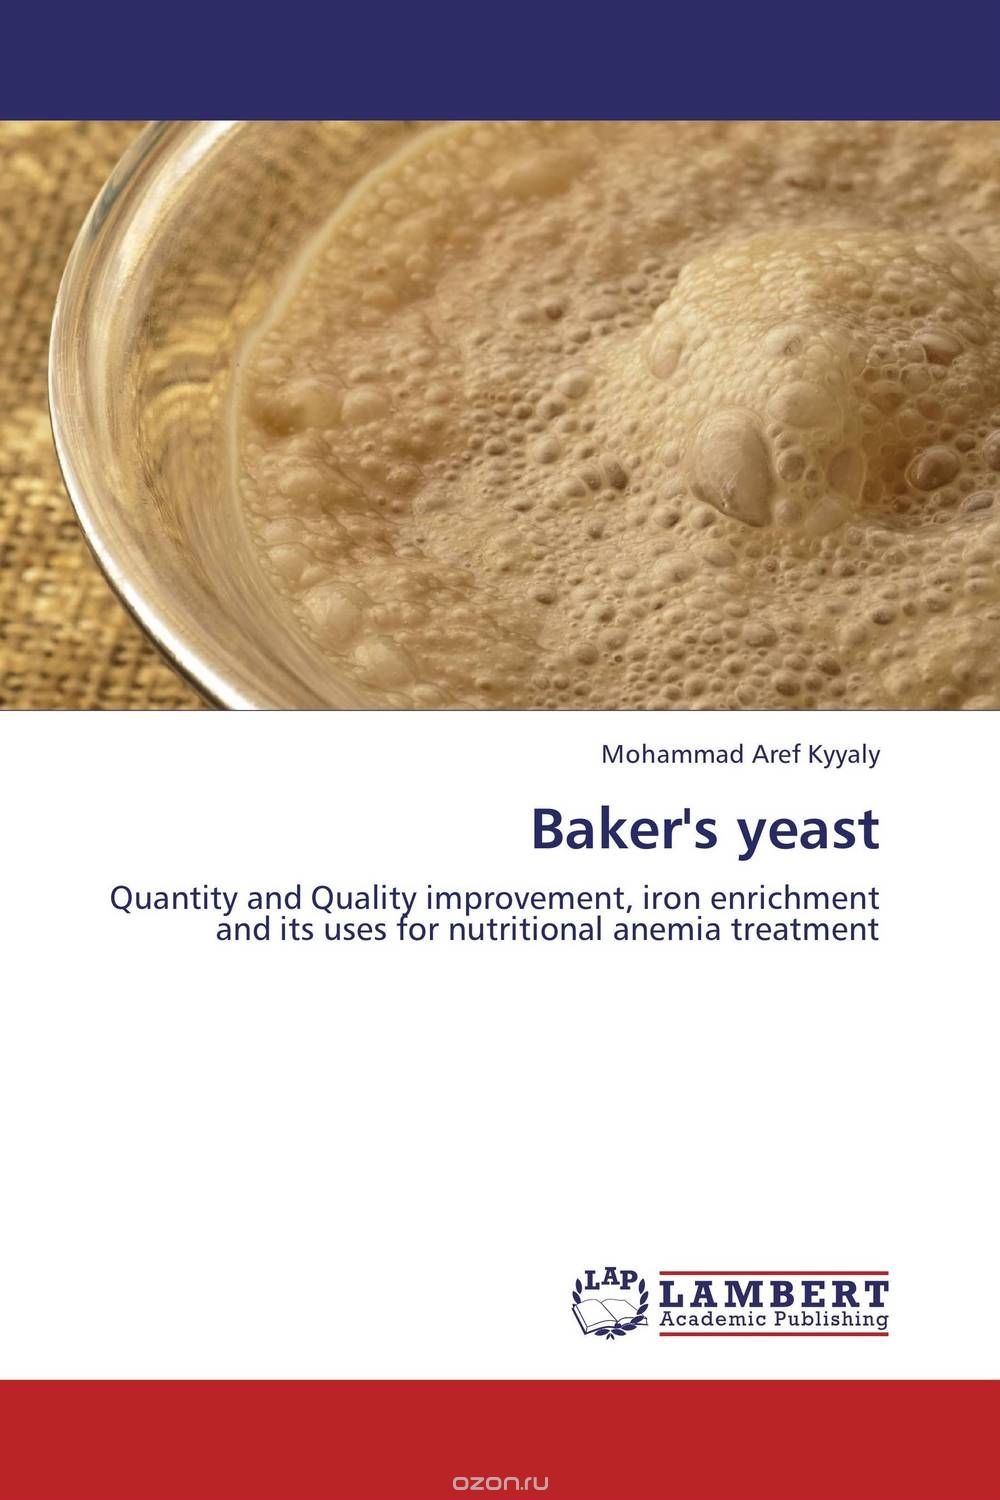 Скачать книгу "Baker's yeast"